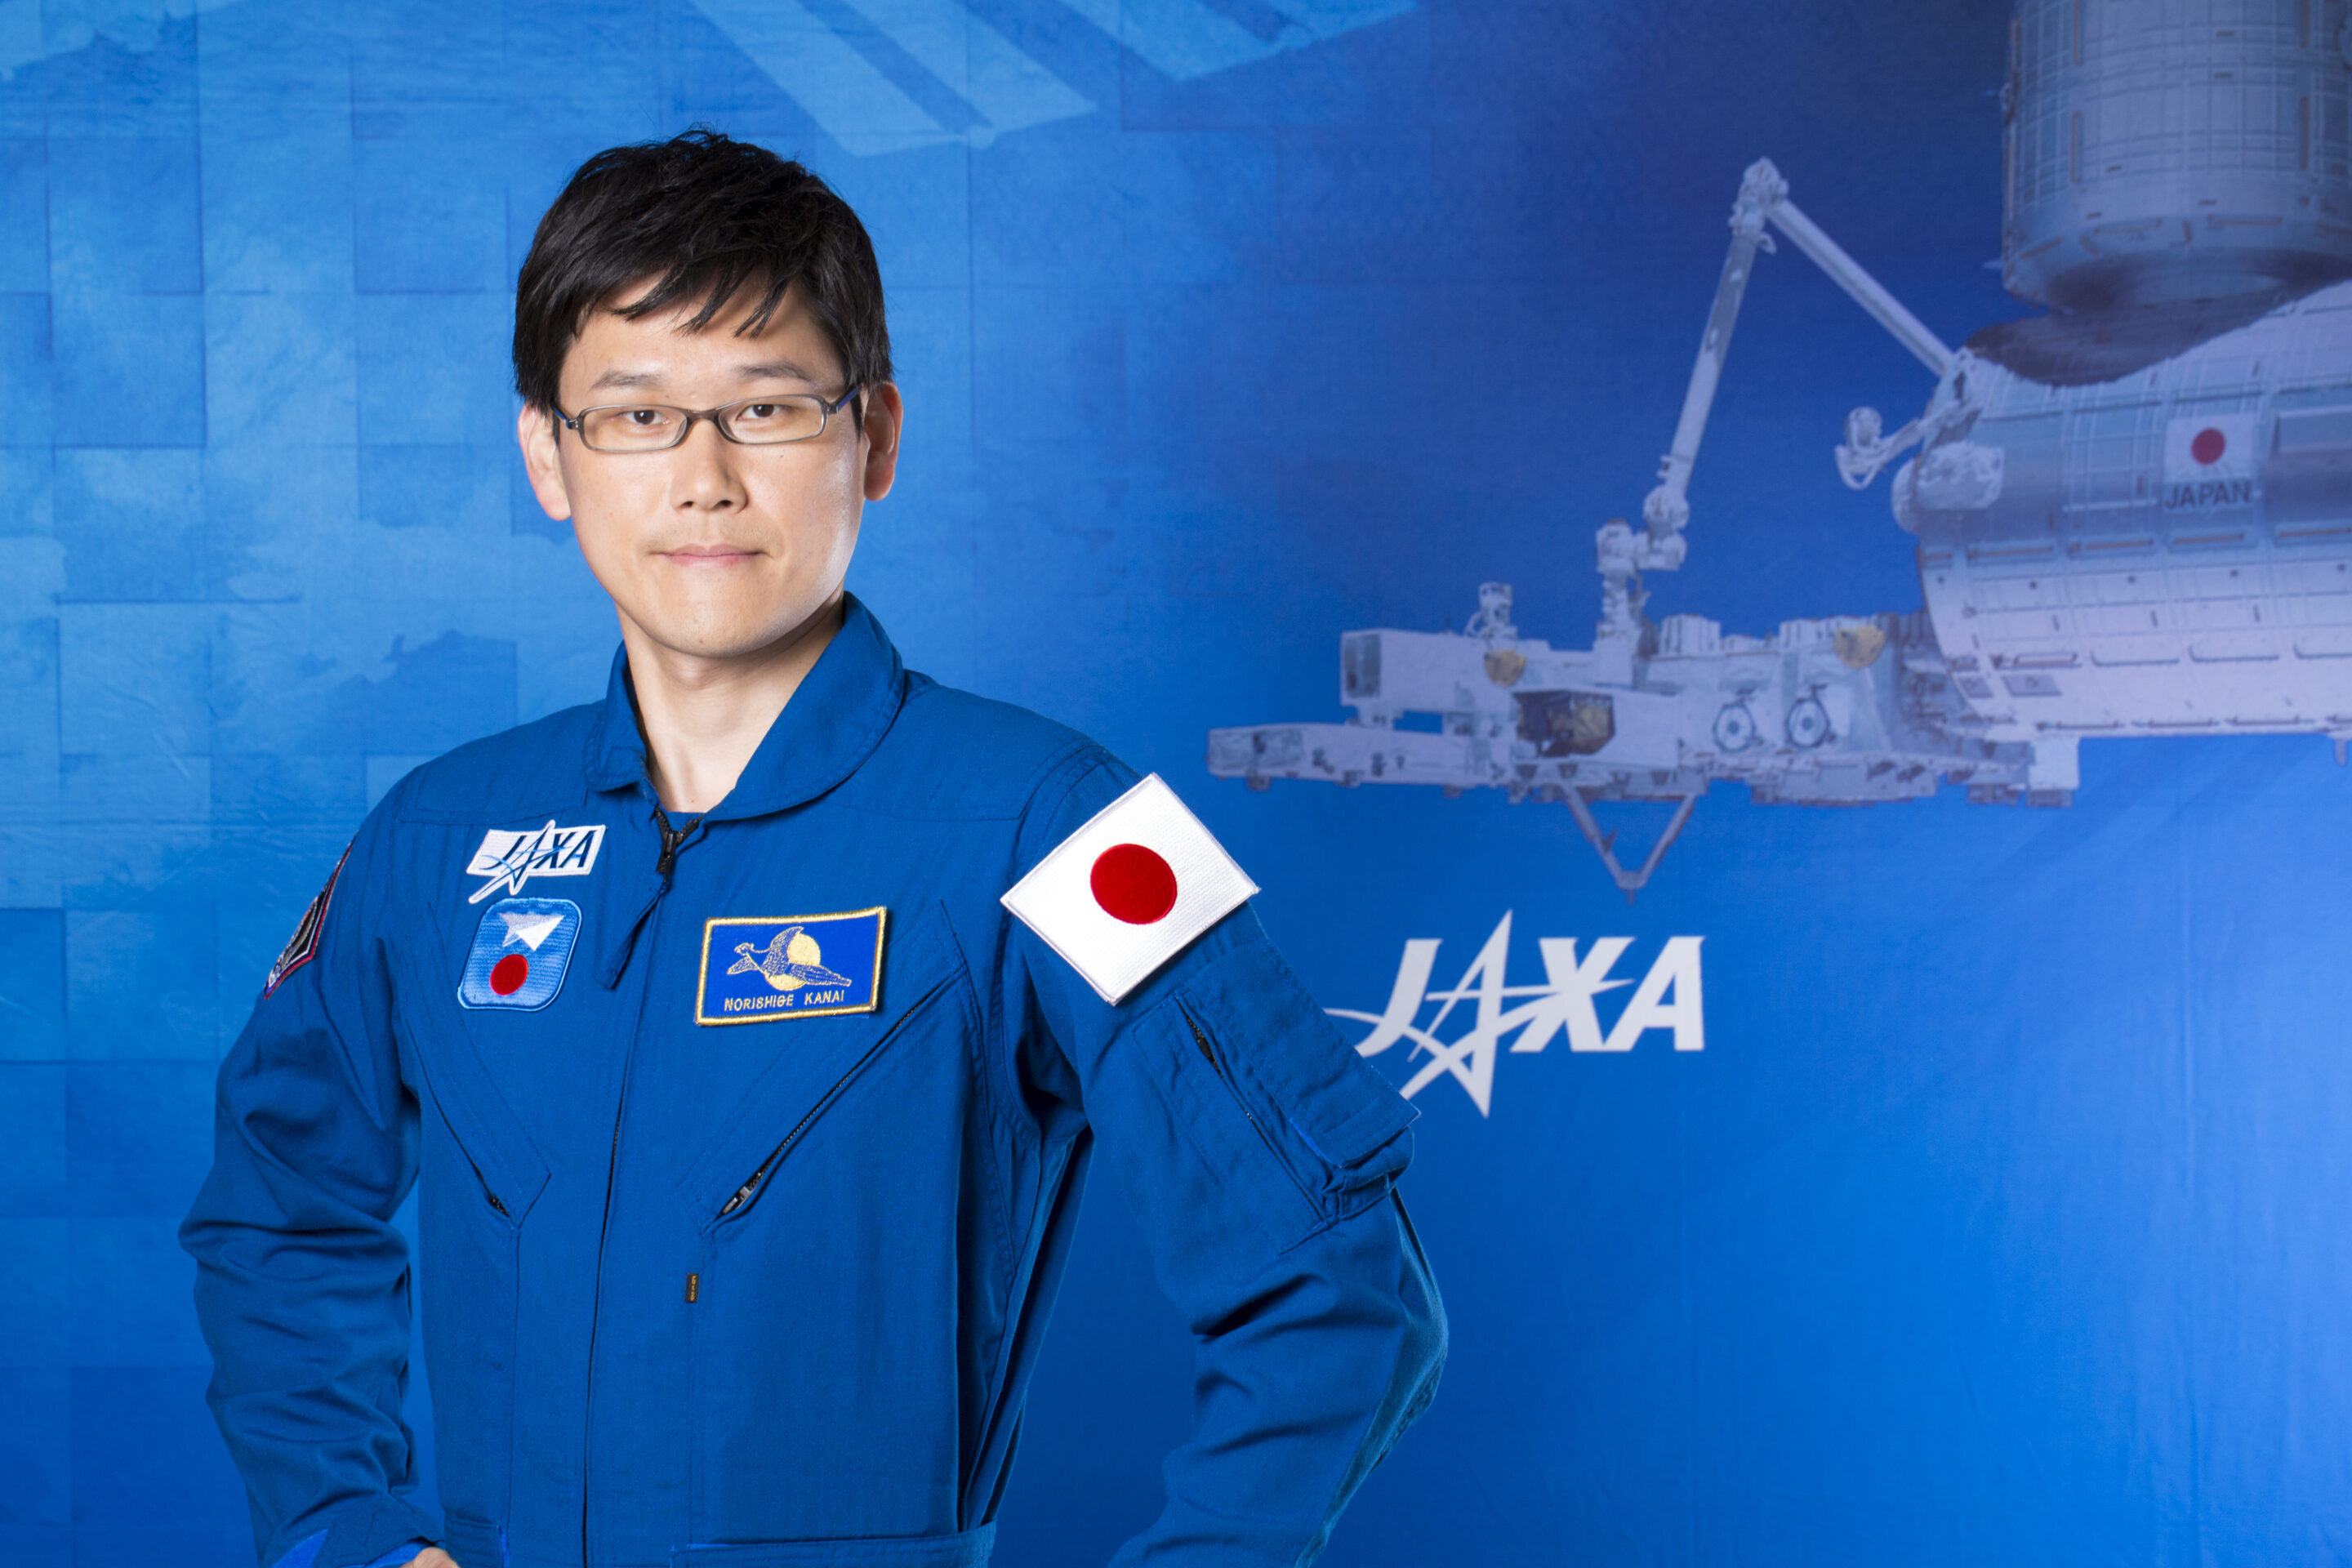 JAXA 金井宣茂宇宙飛行士の写真